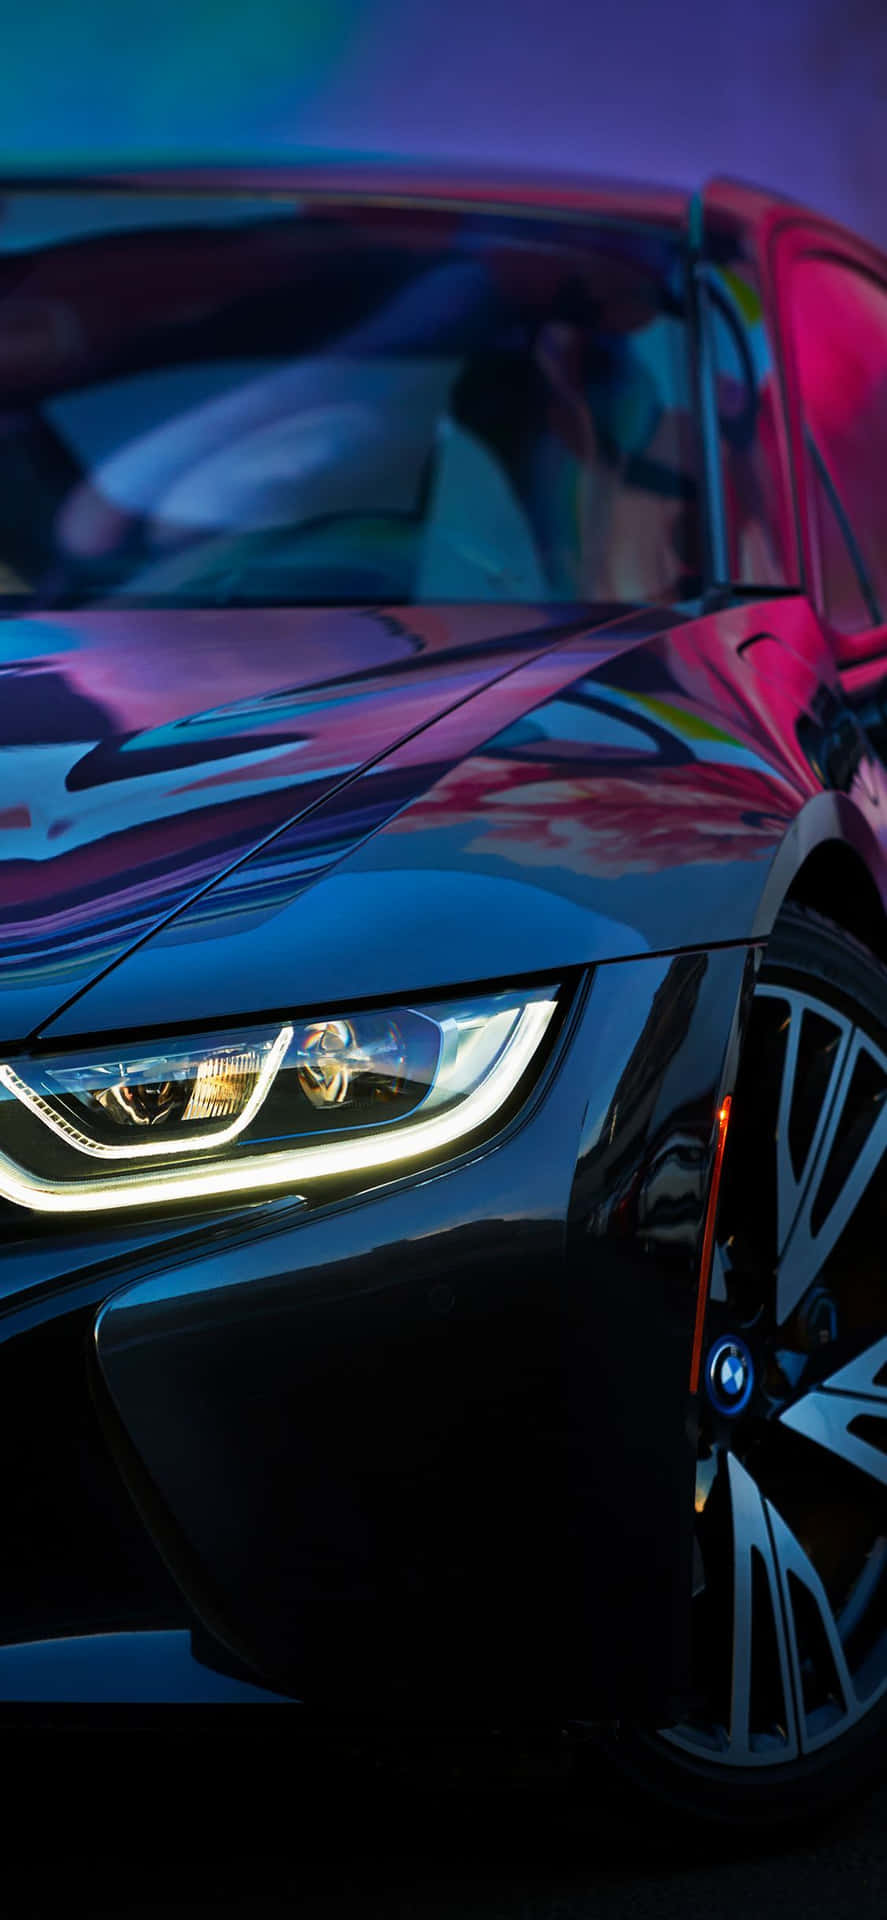 Speeding through the city in style - Pixel 3 BMW